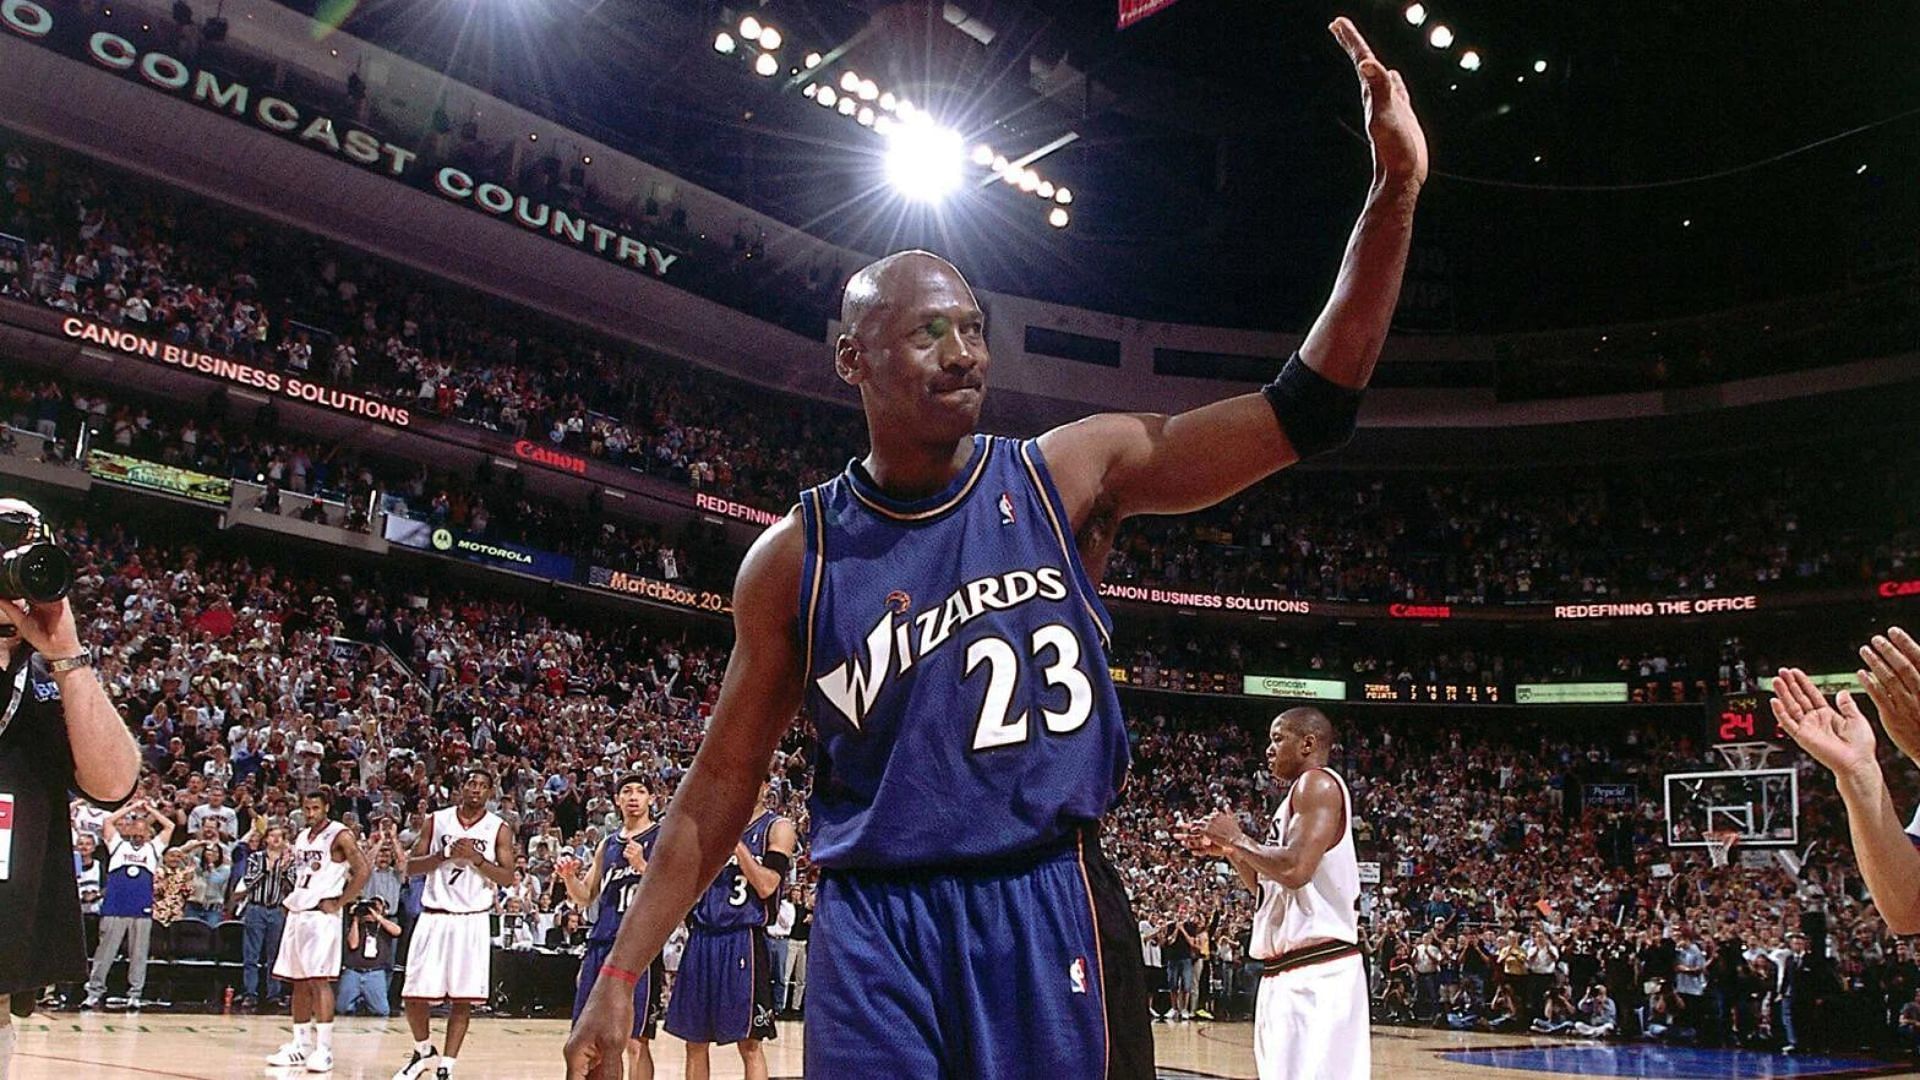 Michael Jordan dons the Washington Wizards jersey [Source: NBA.com]